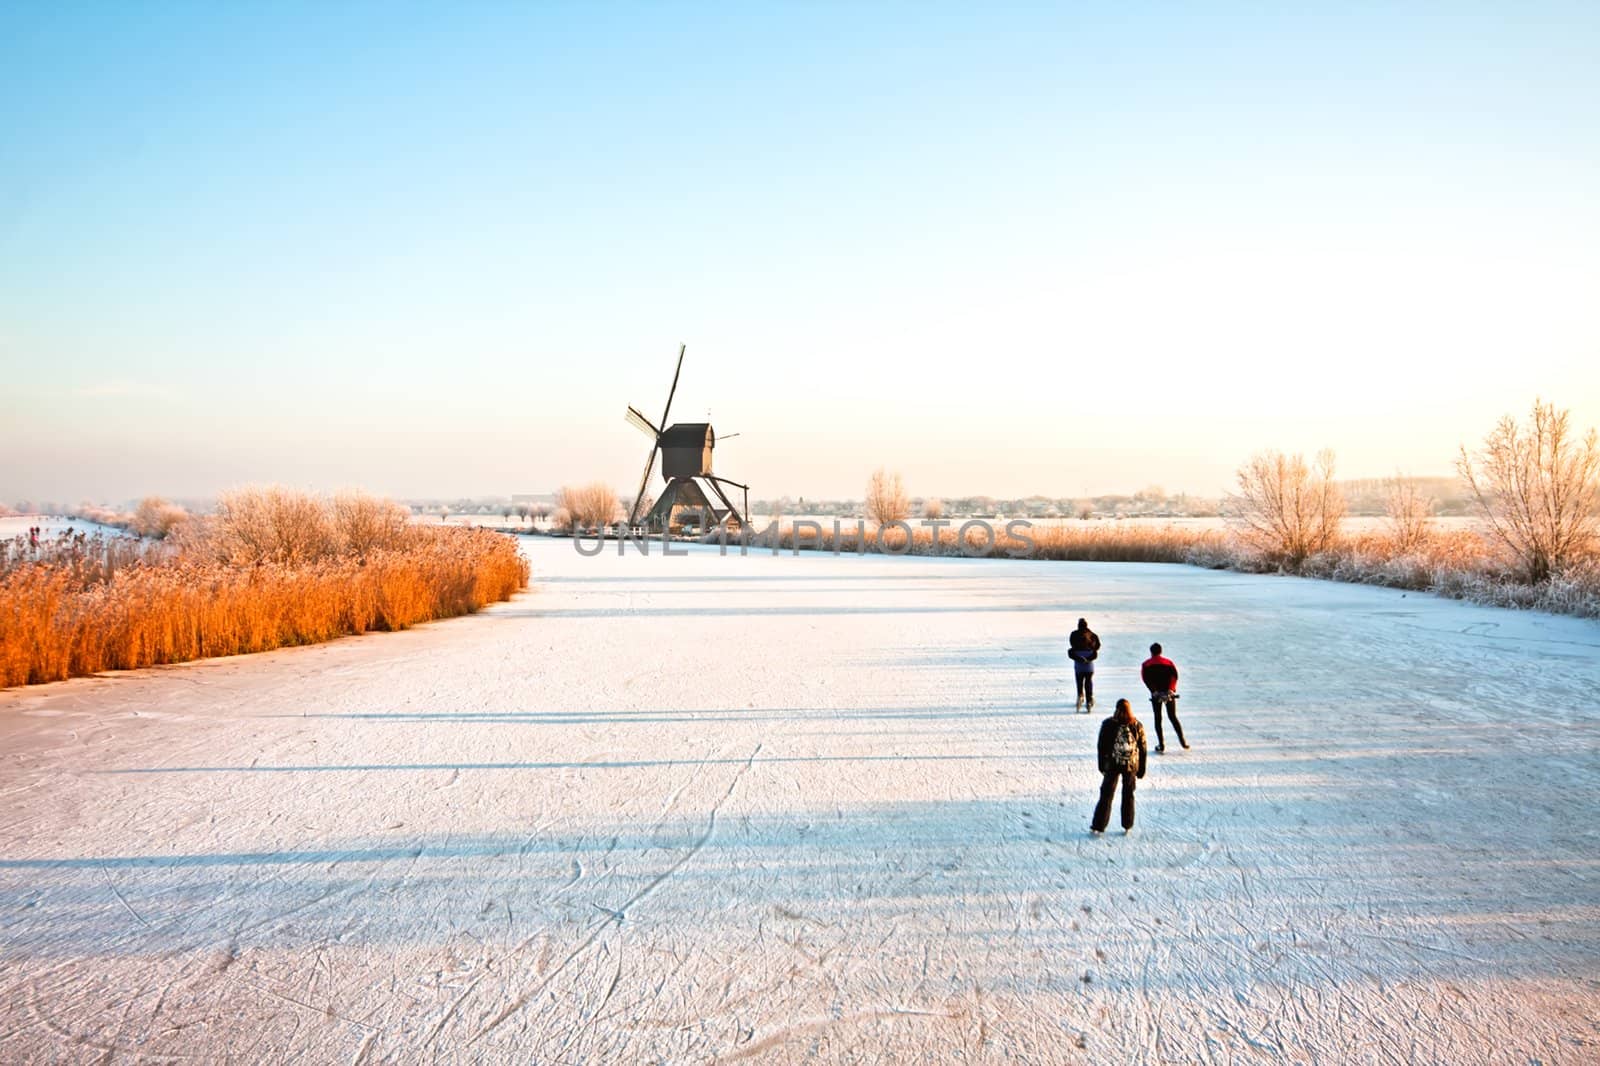 Ice skating at Kinderdijk in the Netherlands